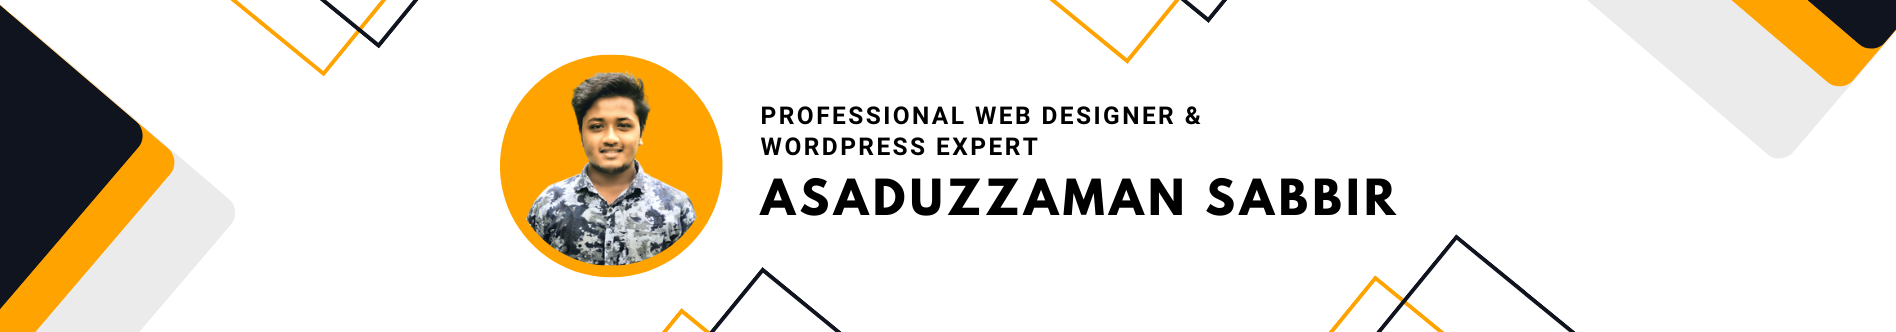 Asaduzzaman Sabbir's profile banner